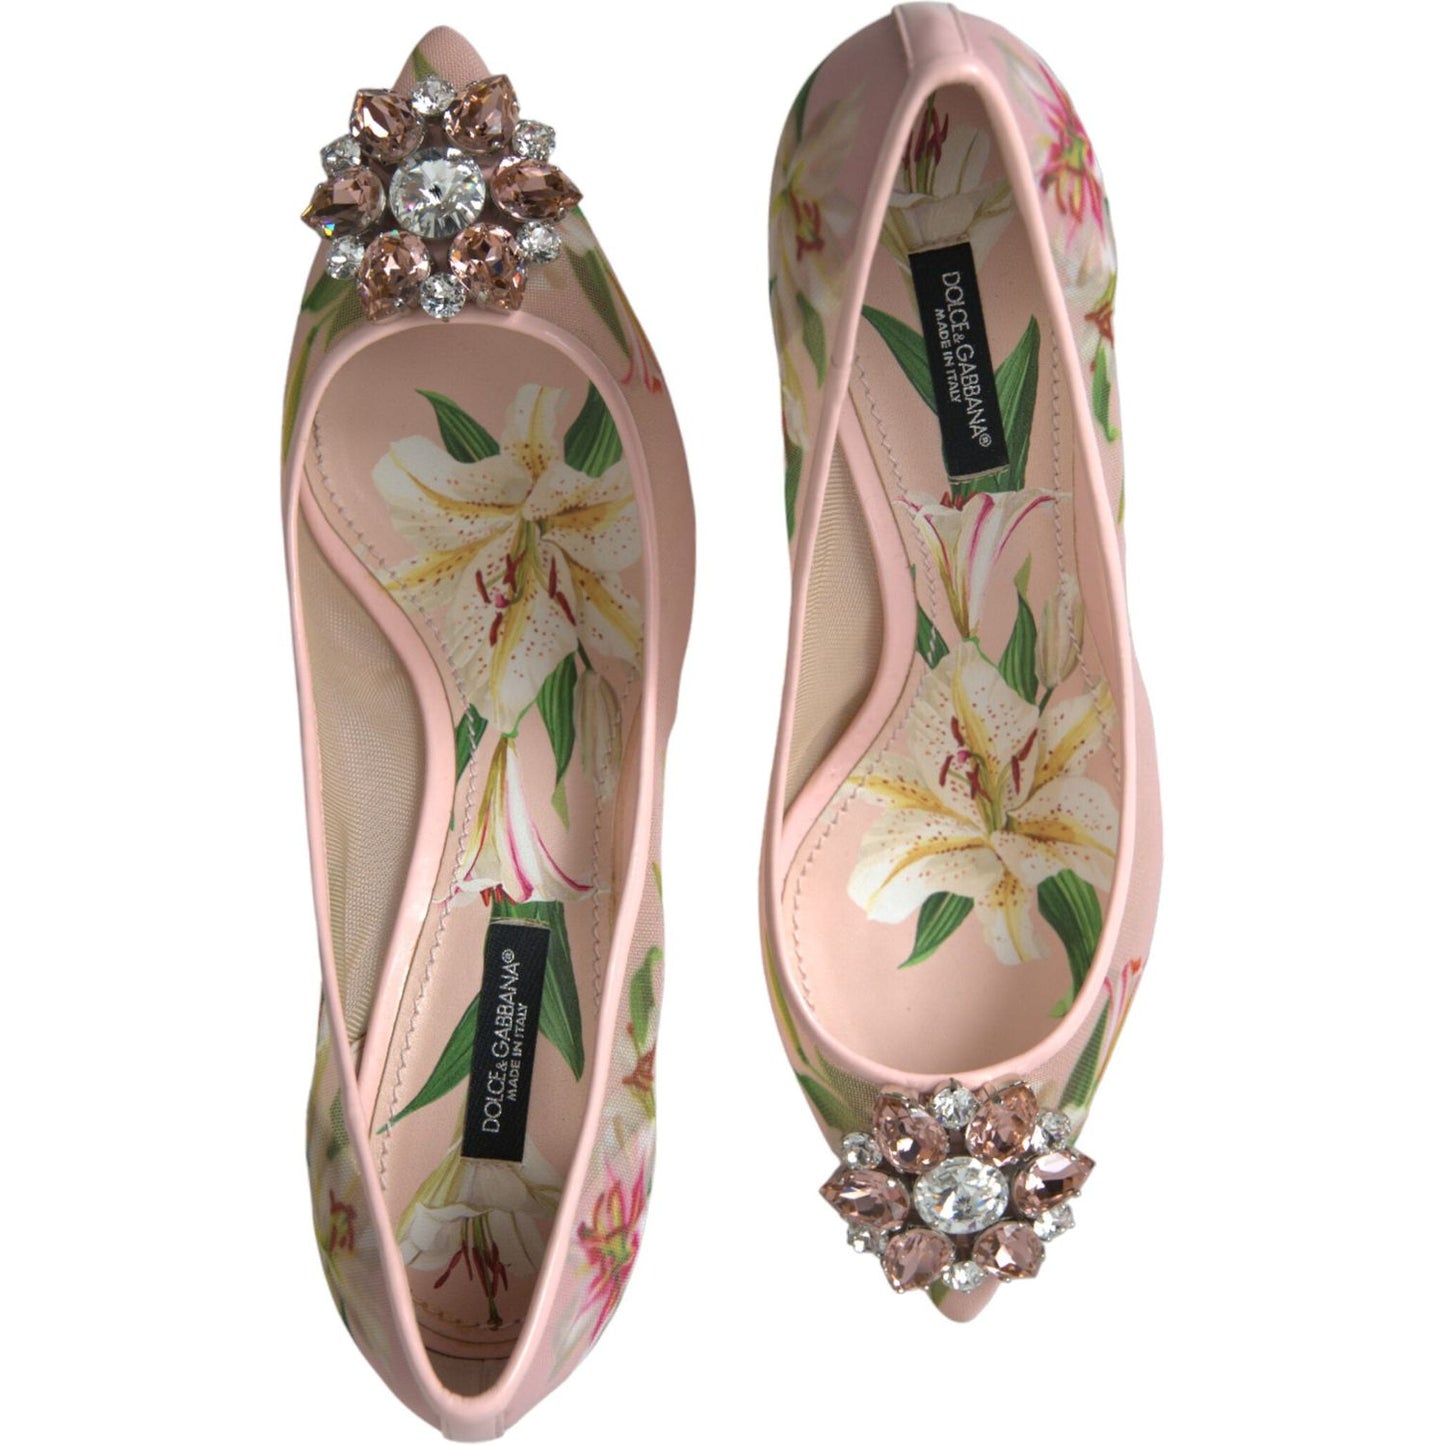 Dolce & Gabbana Elegant Pink Floral Crystal Pumps pink-floral-crystal-heels-pumps-shoes 465A9567-bg-scaled-2fc37c9b-21e.jpg